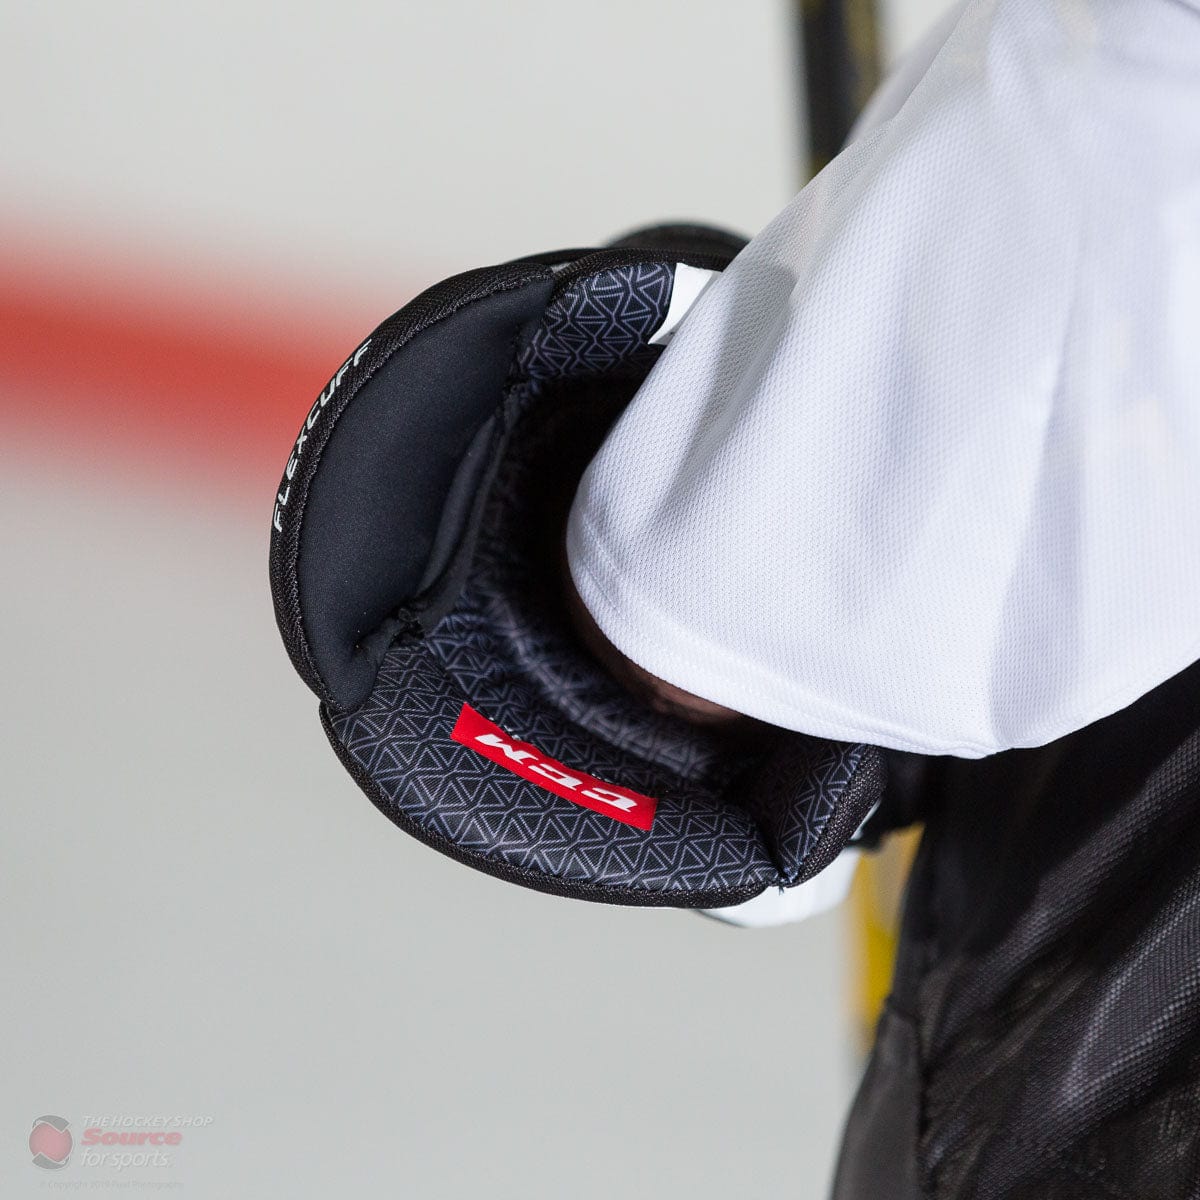 CCM Super Tacks AS1 Senior Hockey Gloves